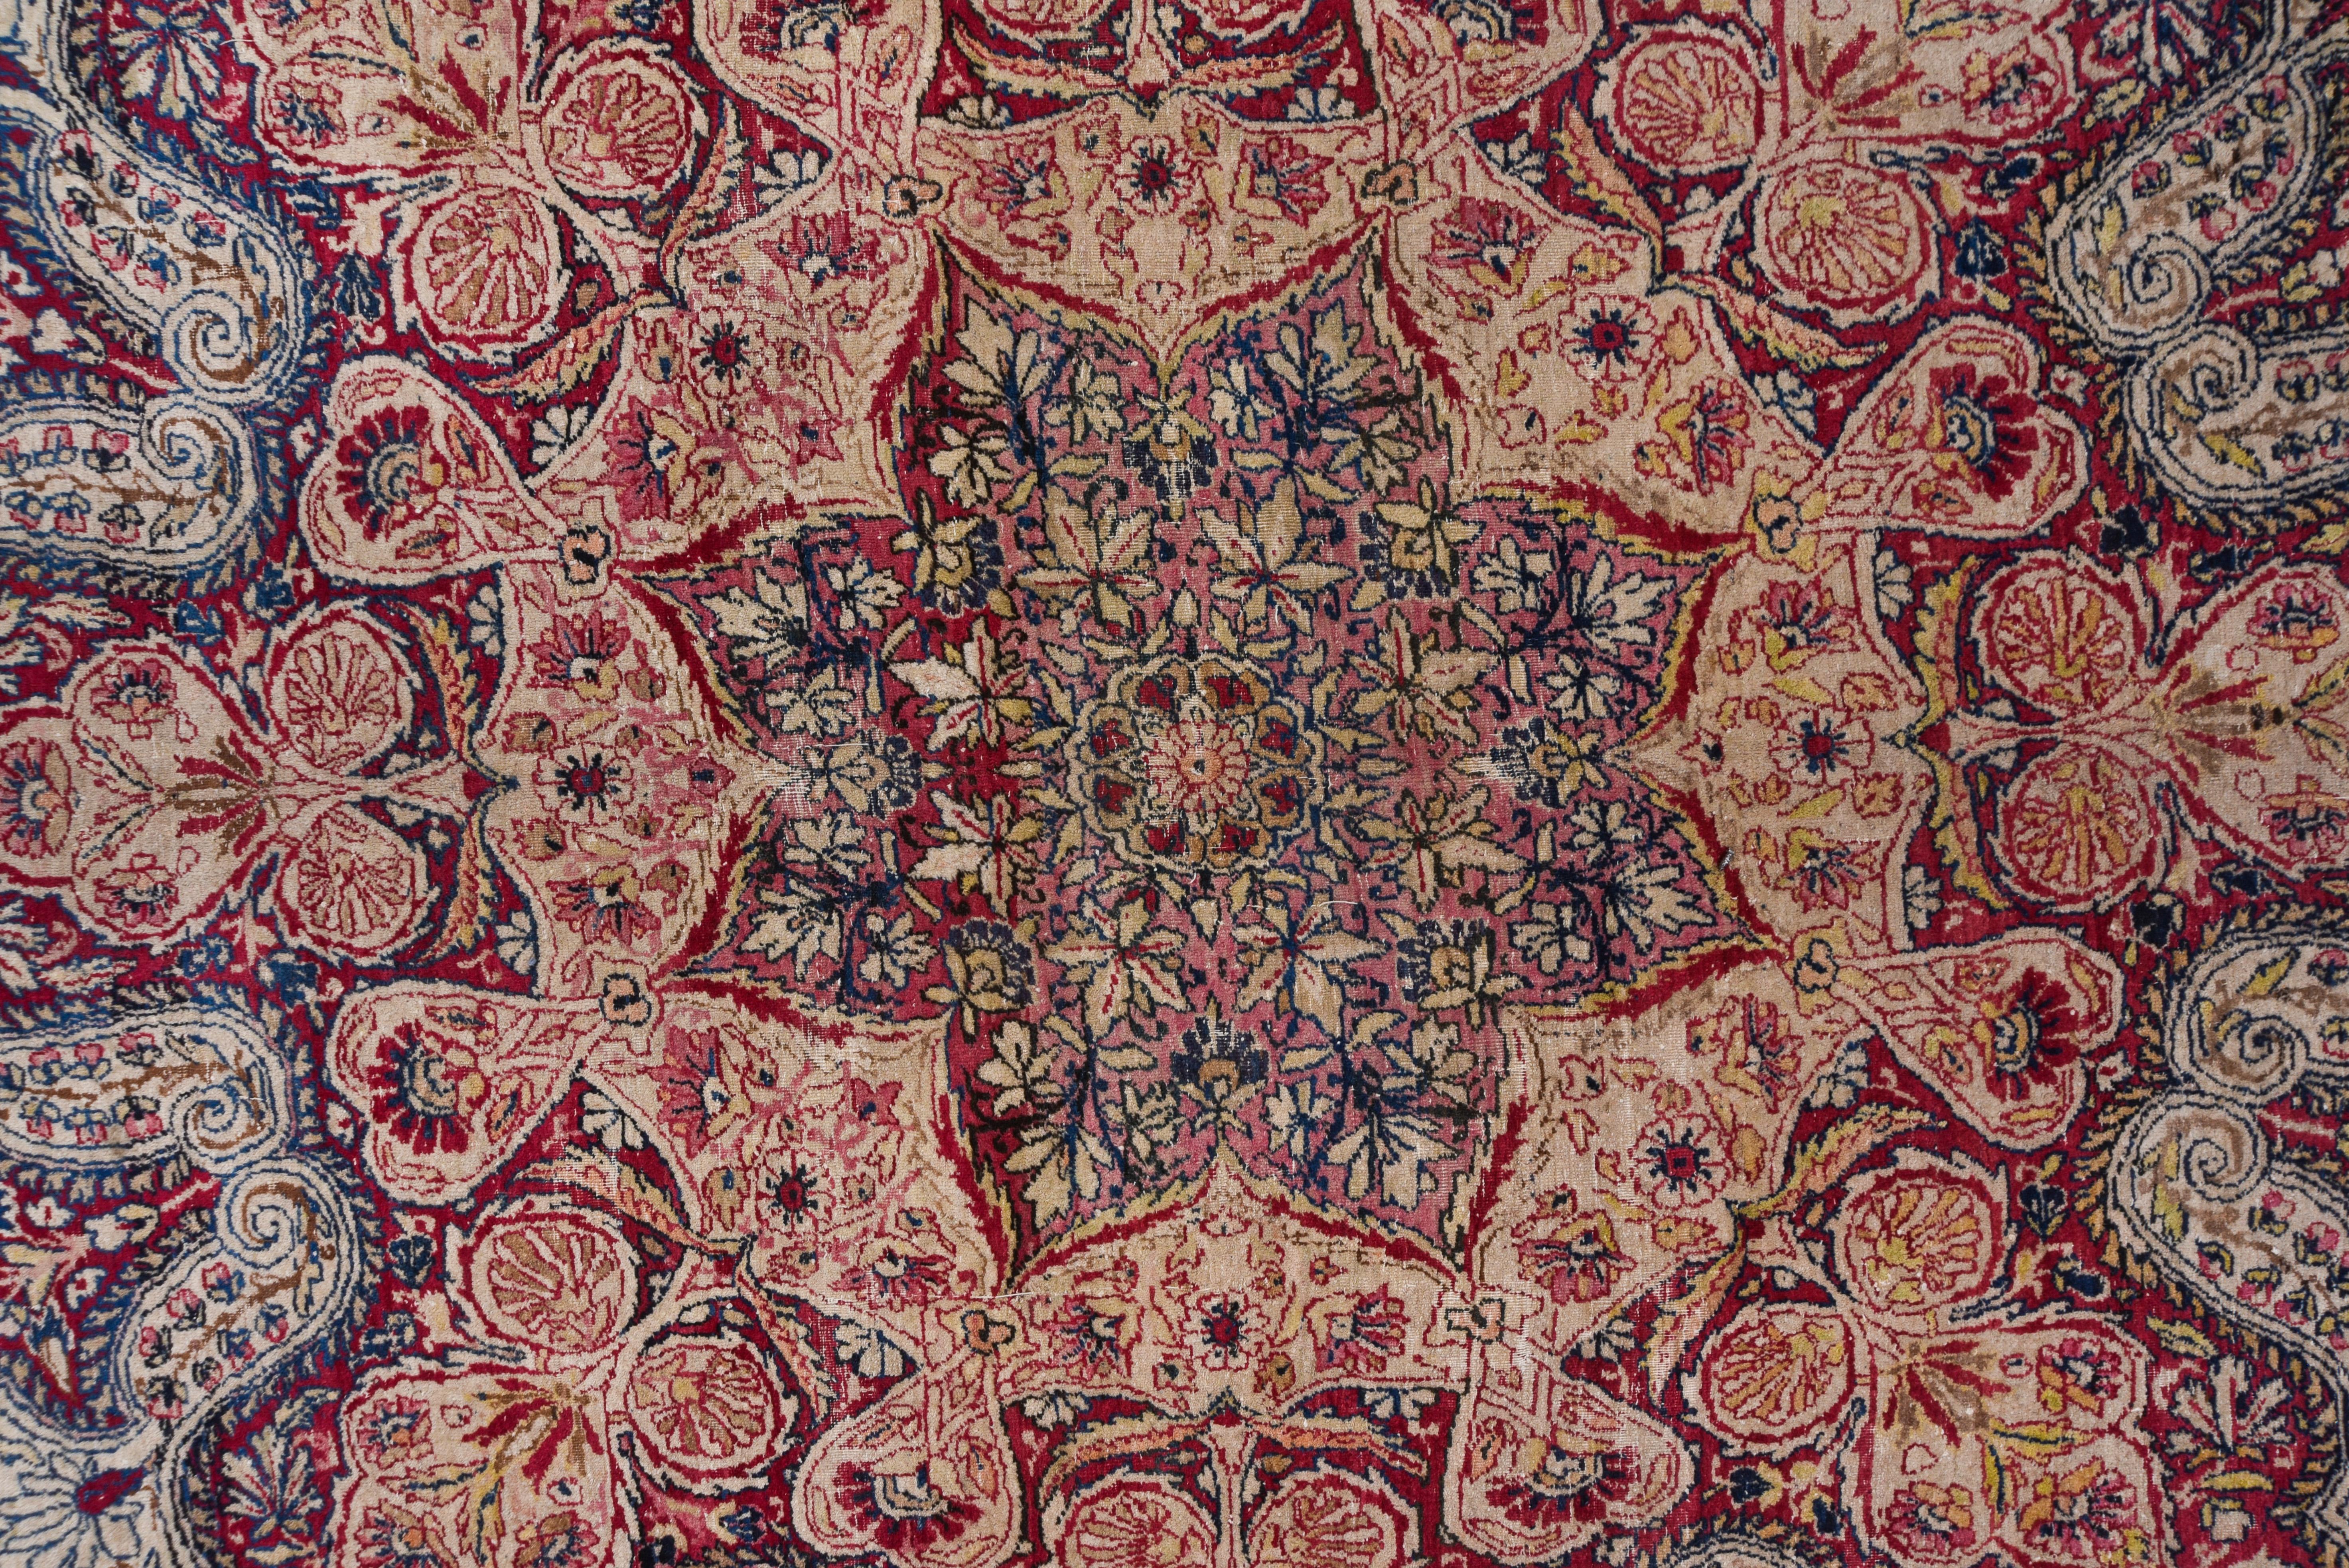 Early 20th Century Antique Colorful Persian Lavar Kerman Carpet, Colorful Palette, Center Medallion